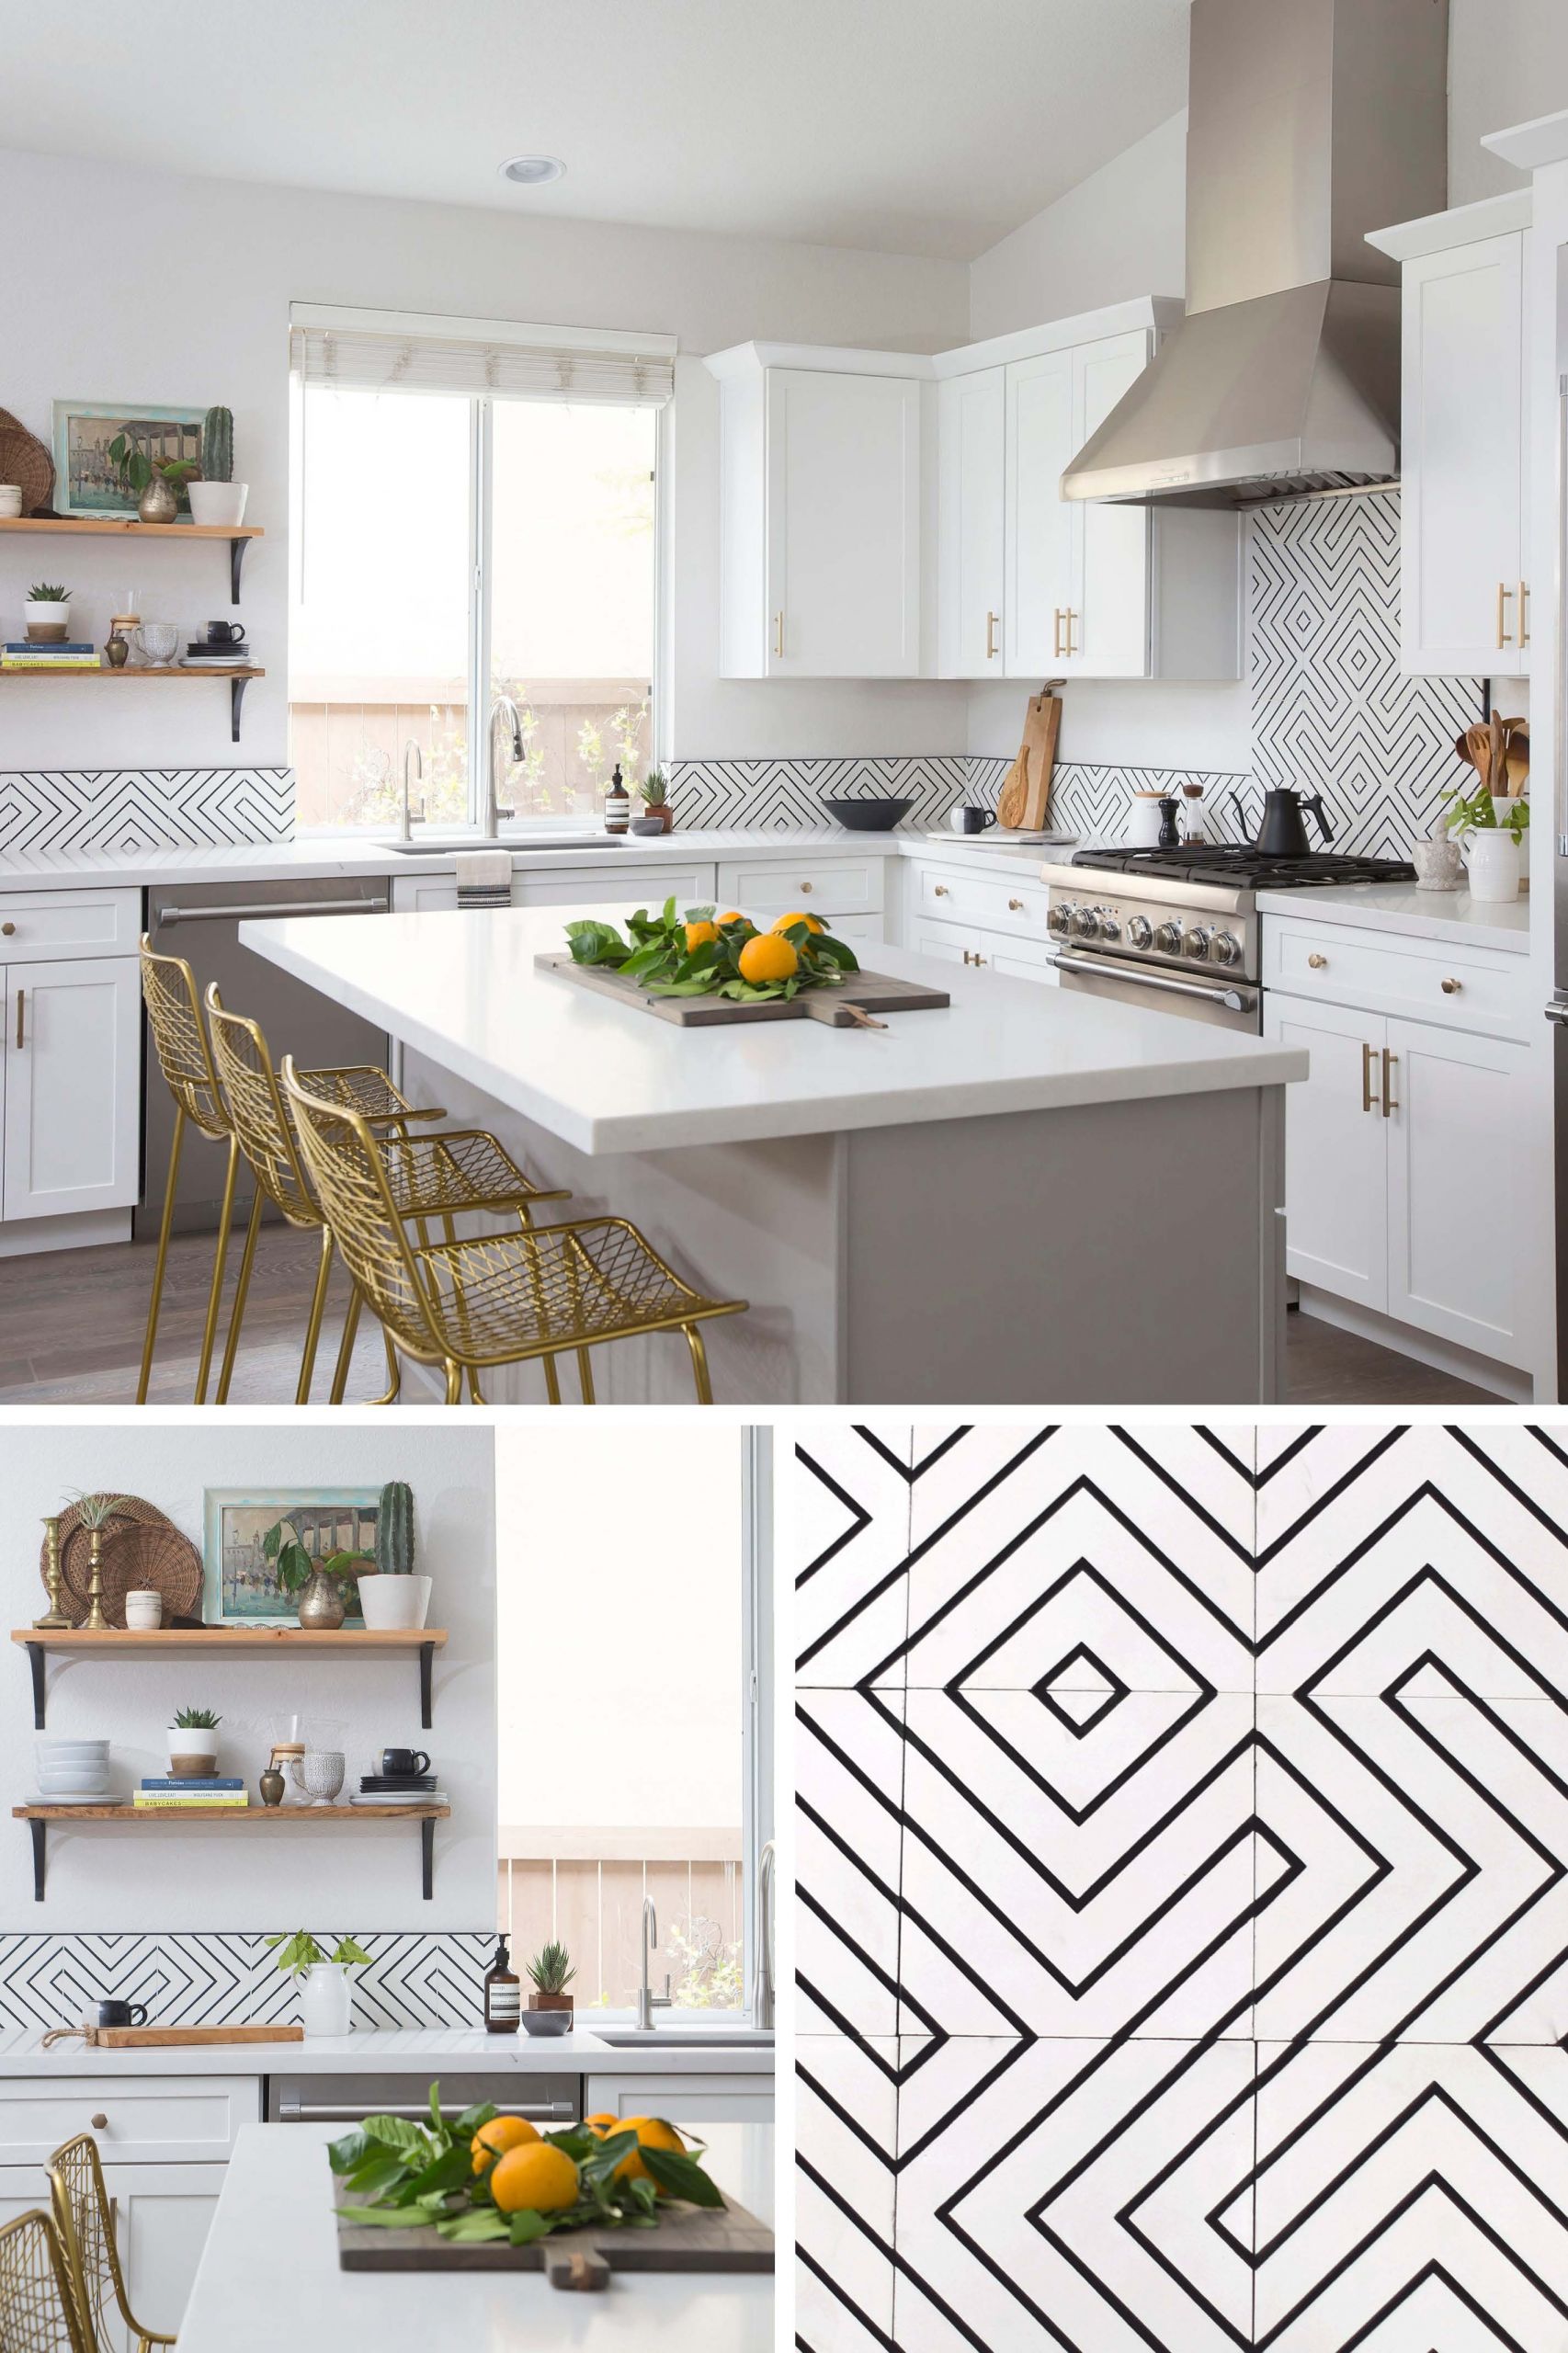 Black And White Kitchen Backsplash
 kitchen reno encaustic cement tile backsplash steals the